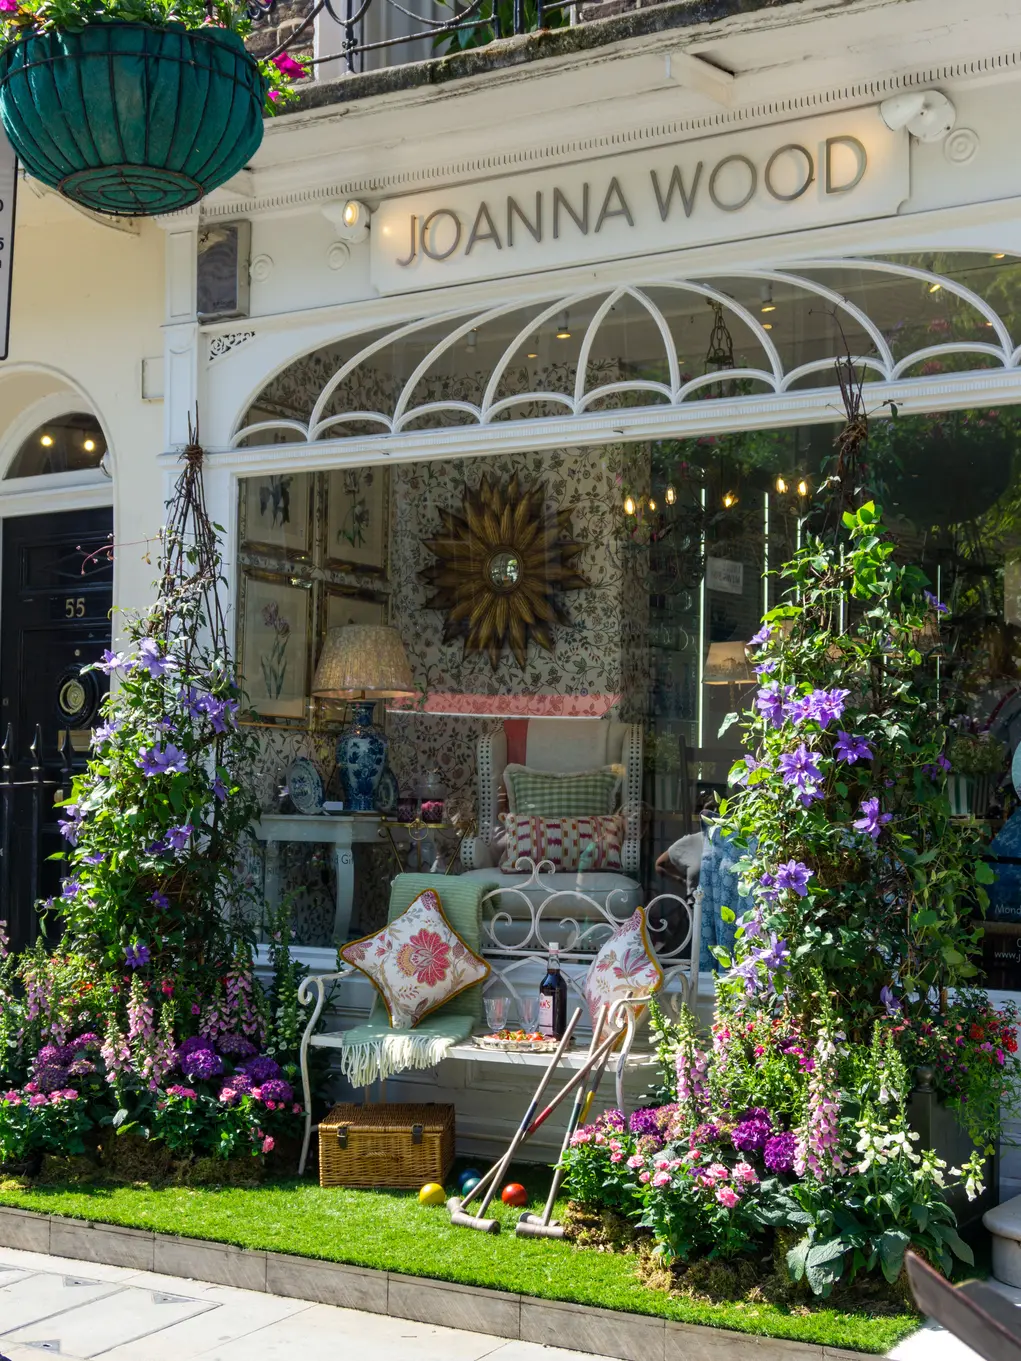 Joanna Wood shopfront